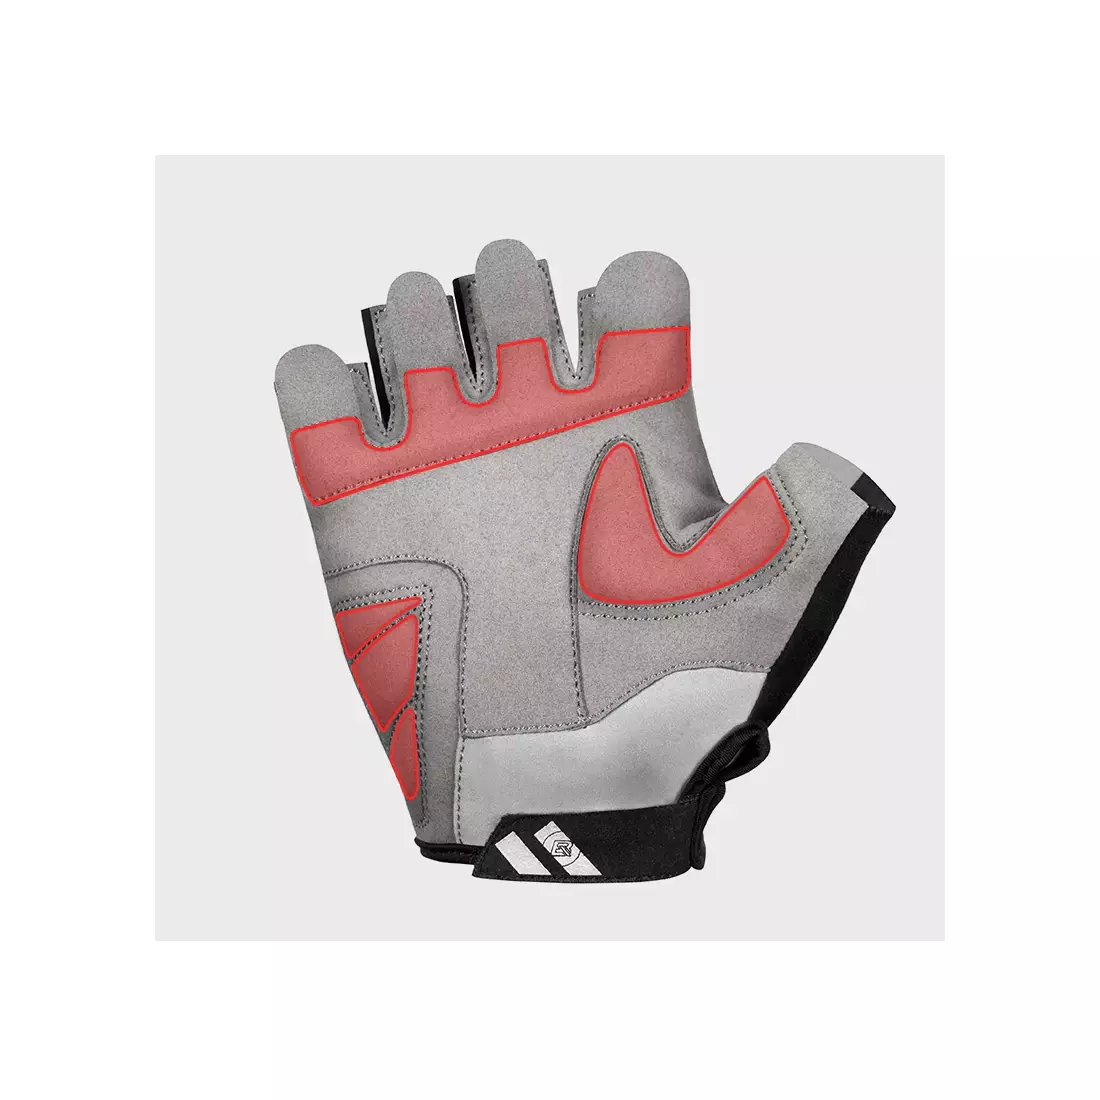 Rockbros cycling gloves short finger, black S227-BK